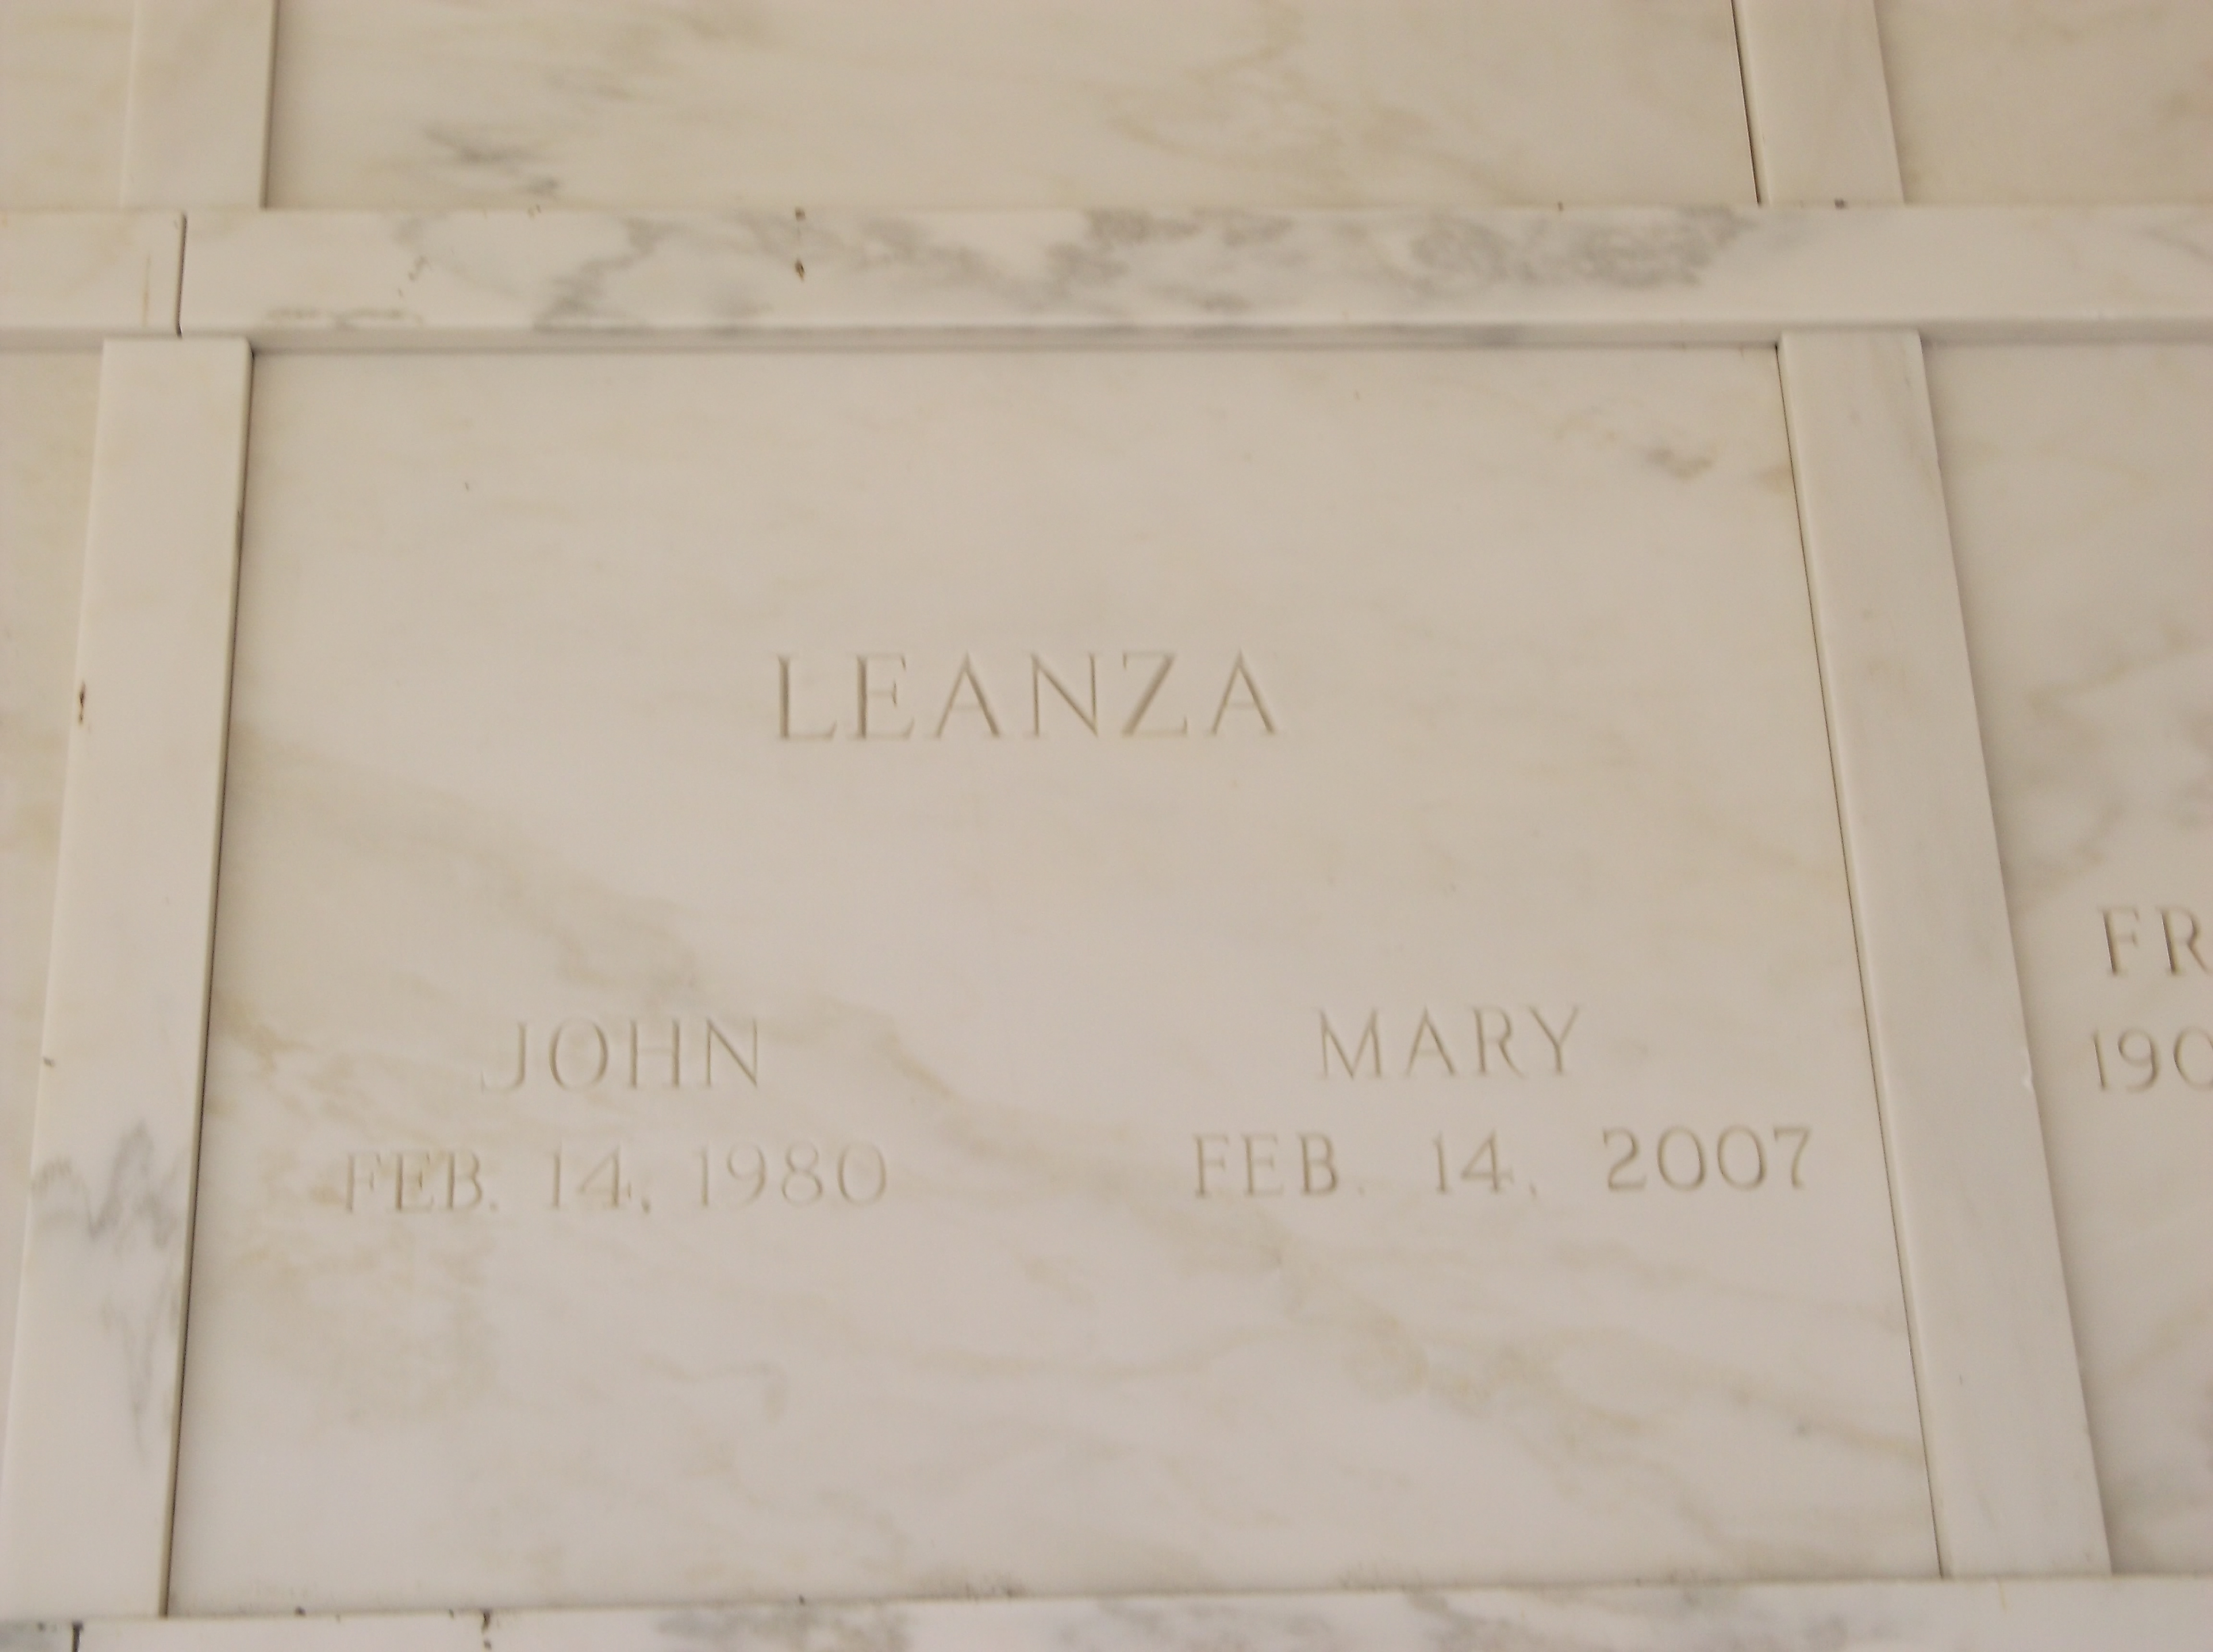 Mary Leanza